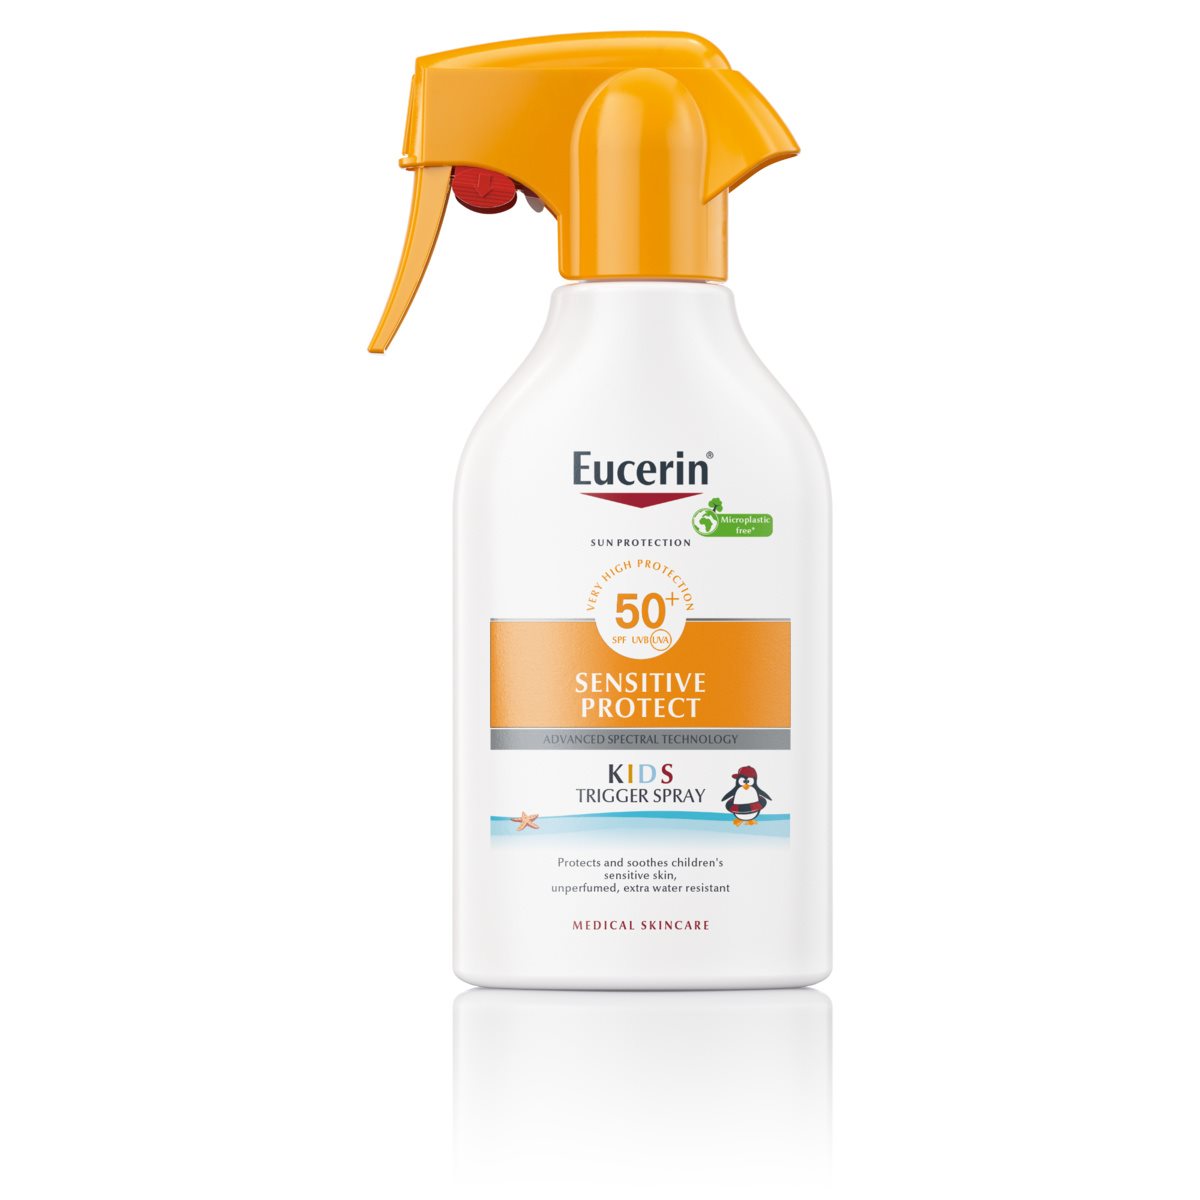 Kids Trigger Spray Sensitive Protect SPF 50+ | sunscreen for | Eucerin